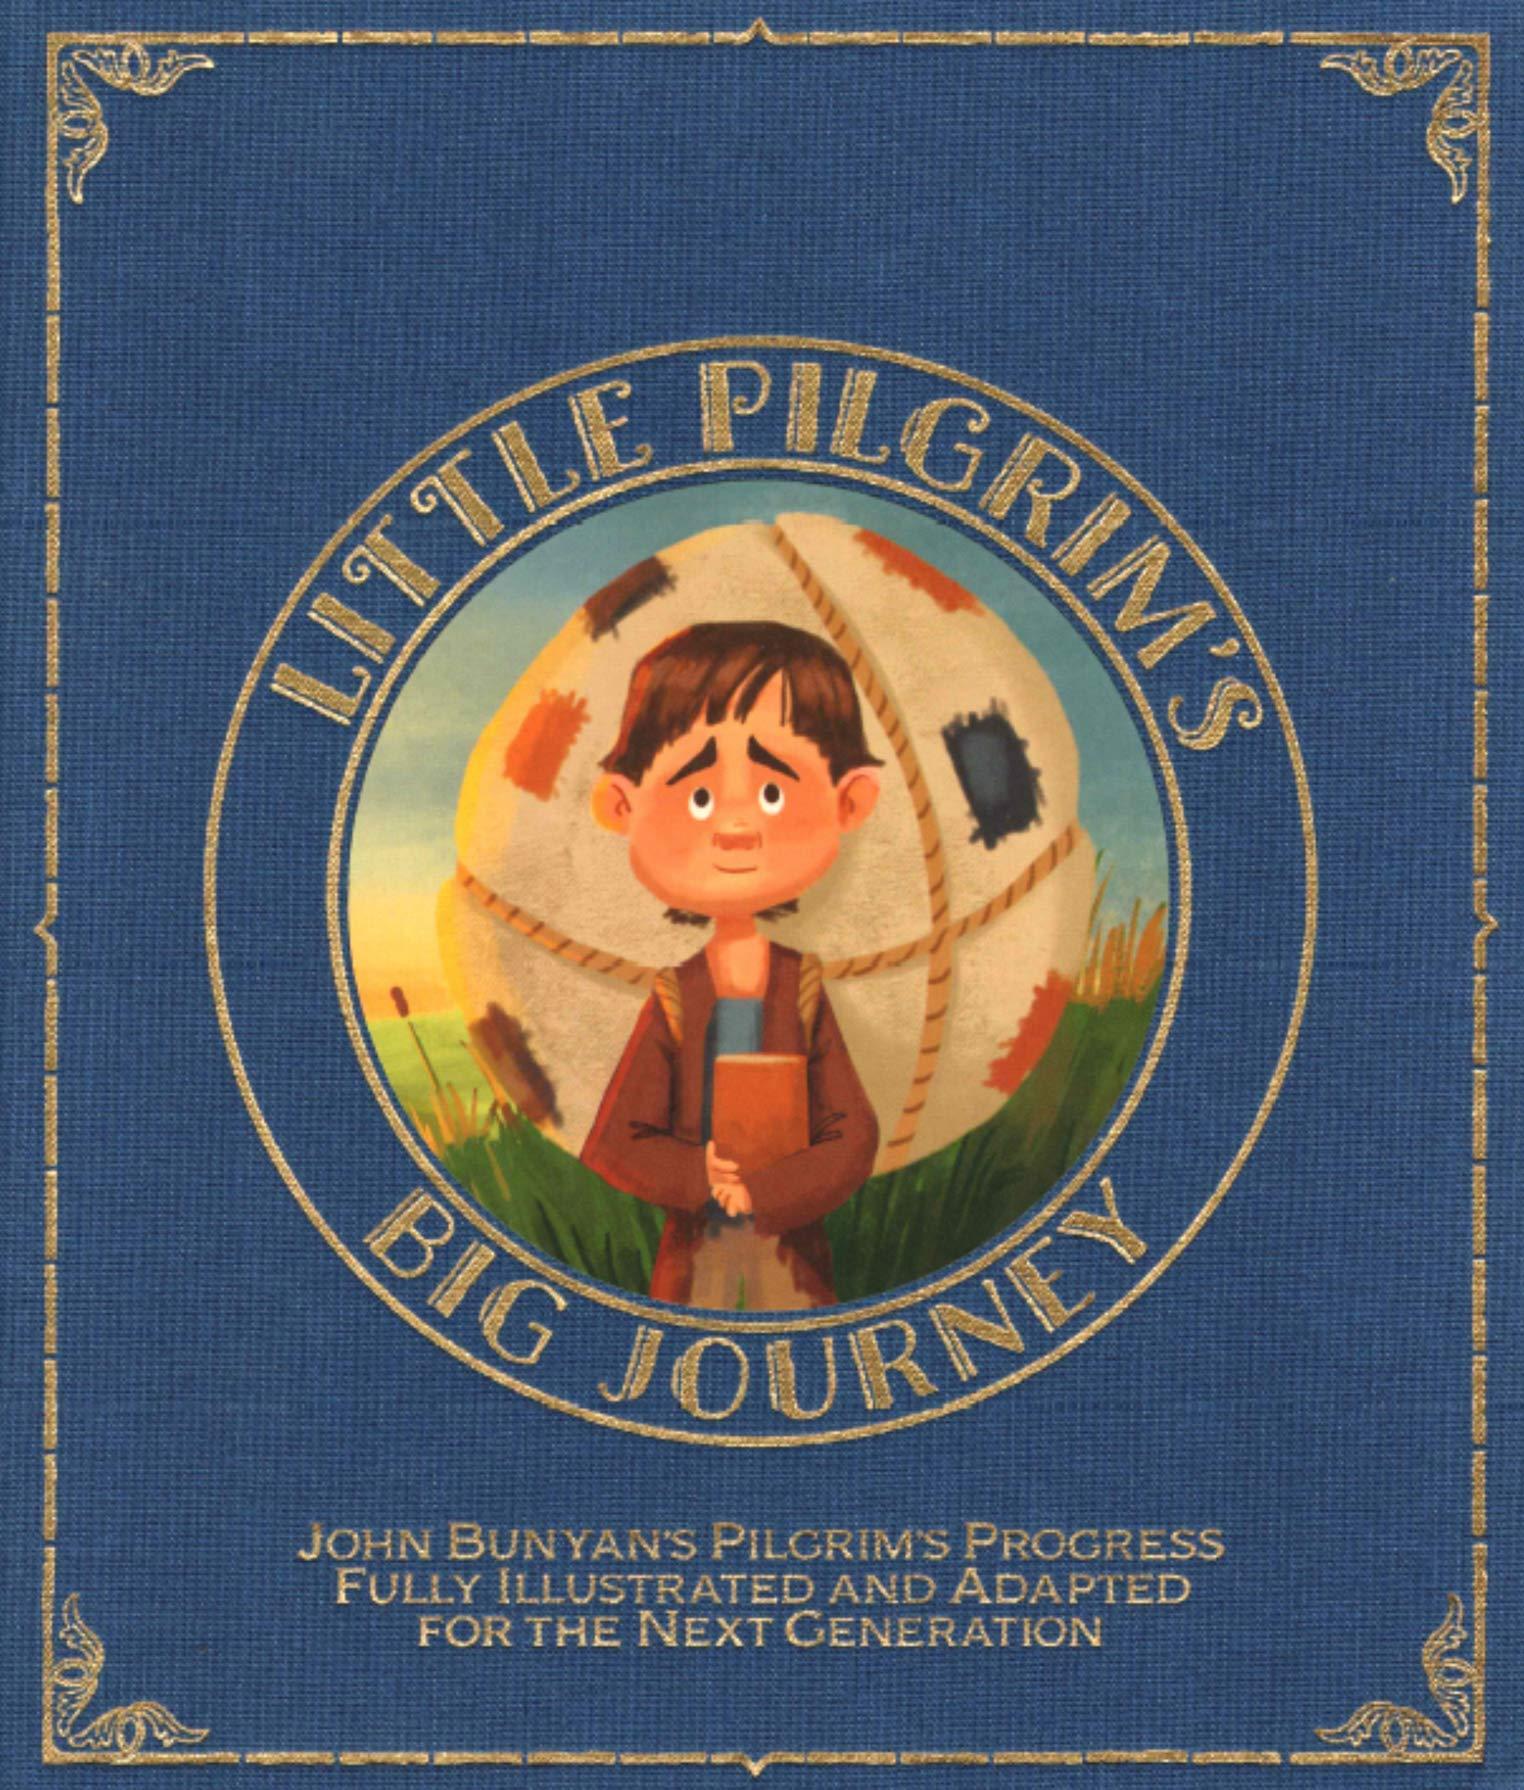 Little Pilgrim's Big Journey